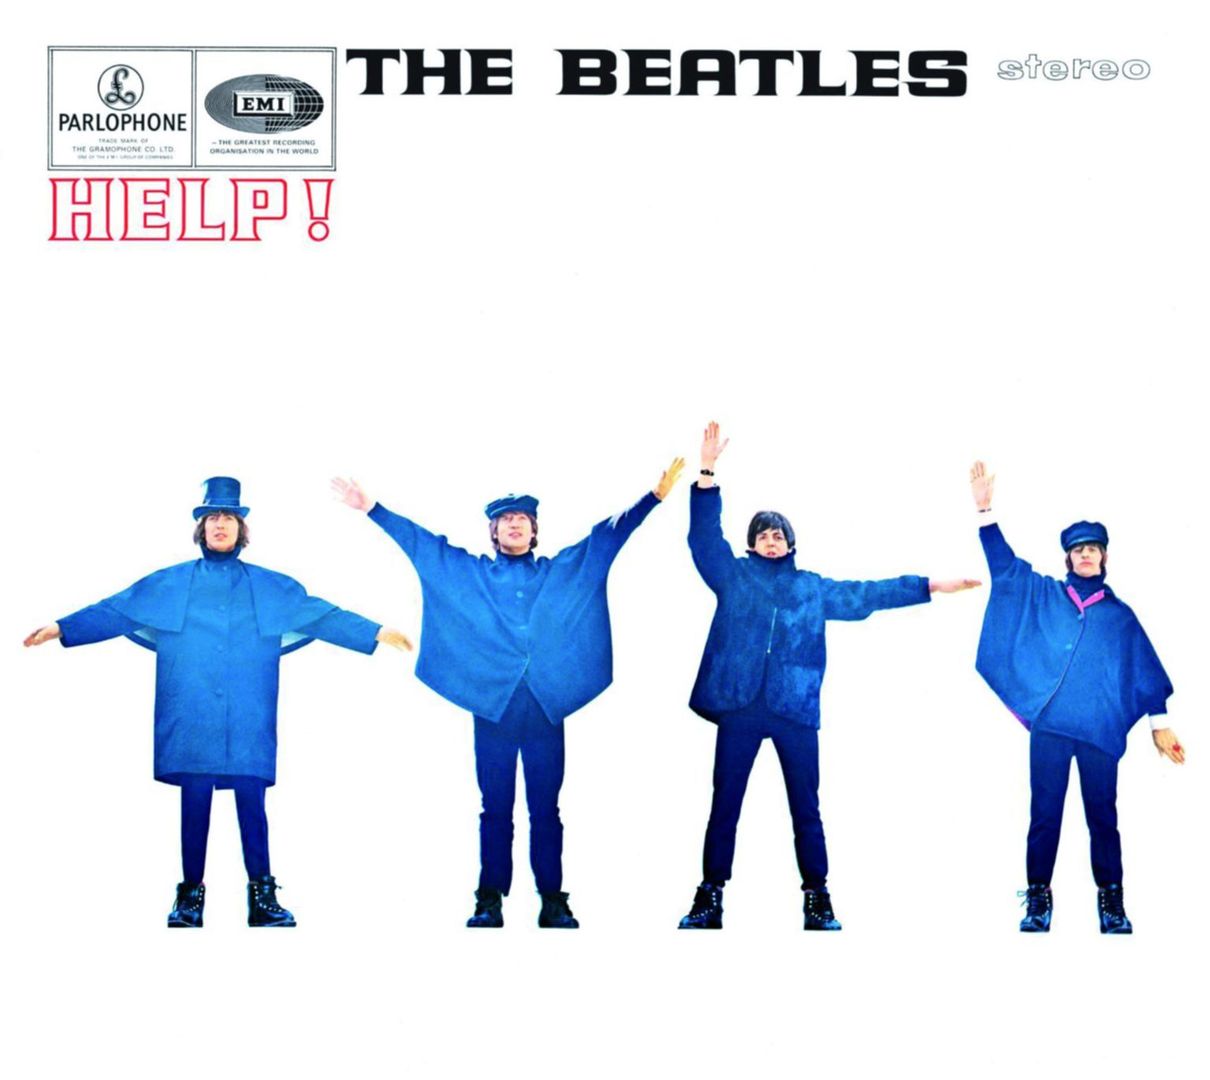 The Beatles: Help! (GB 965)